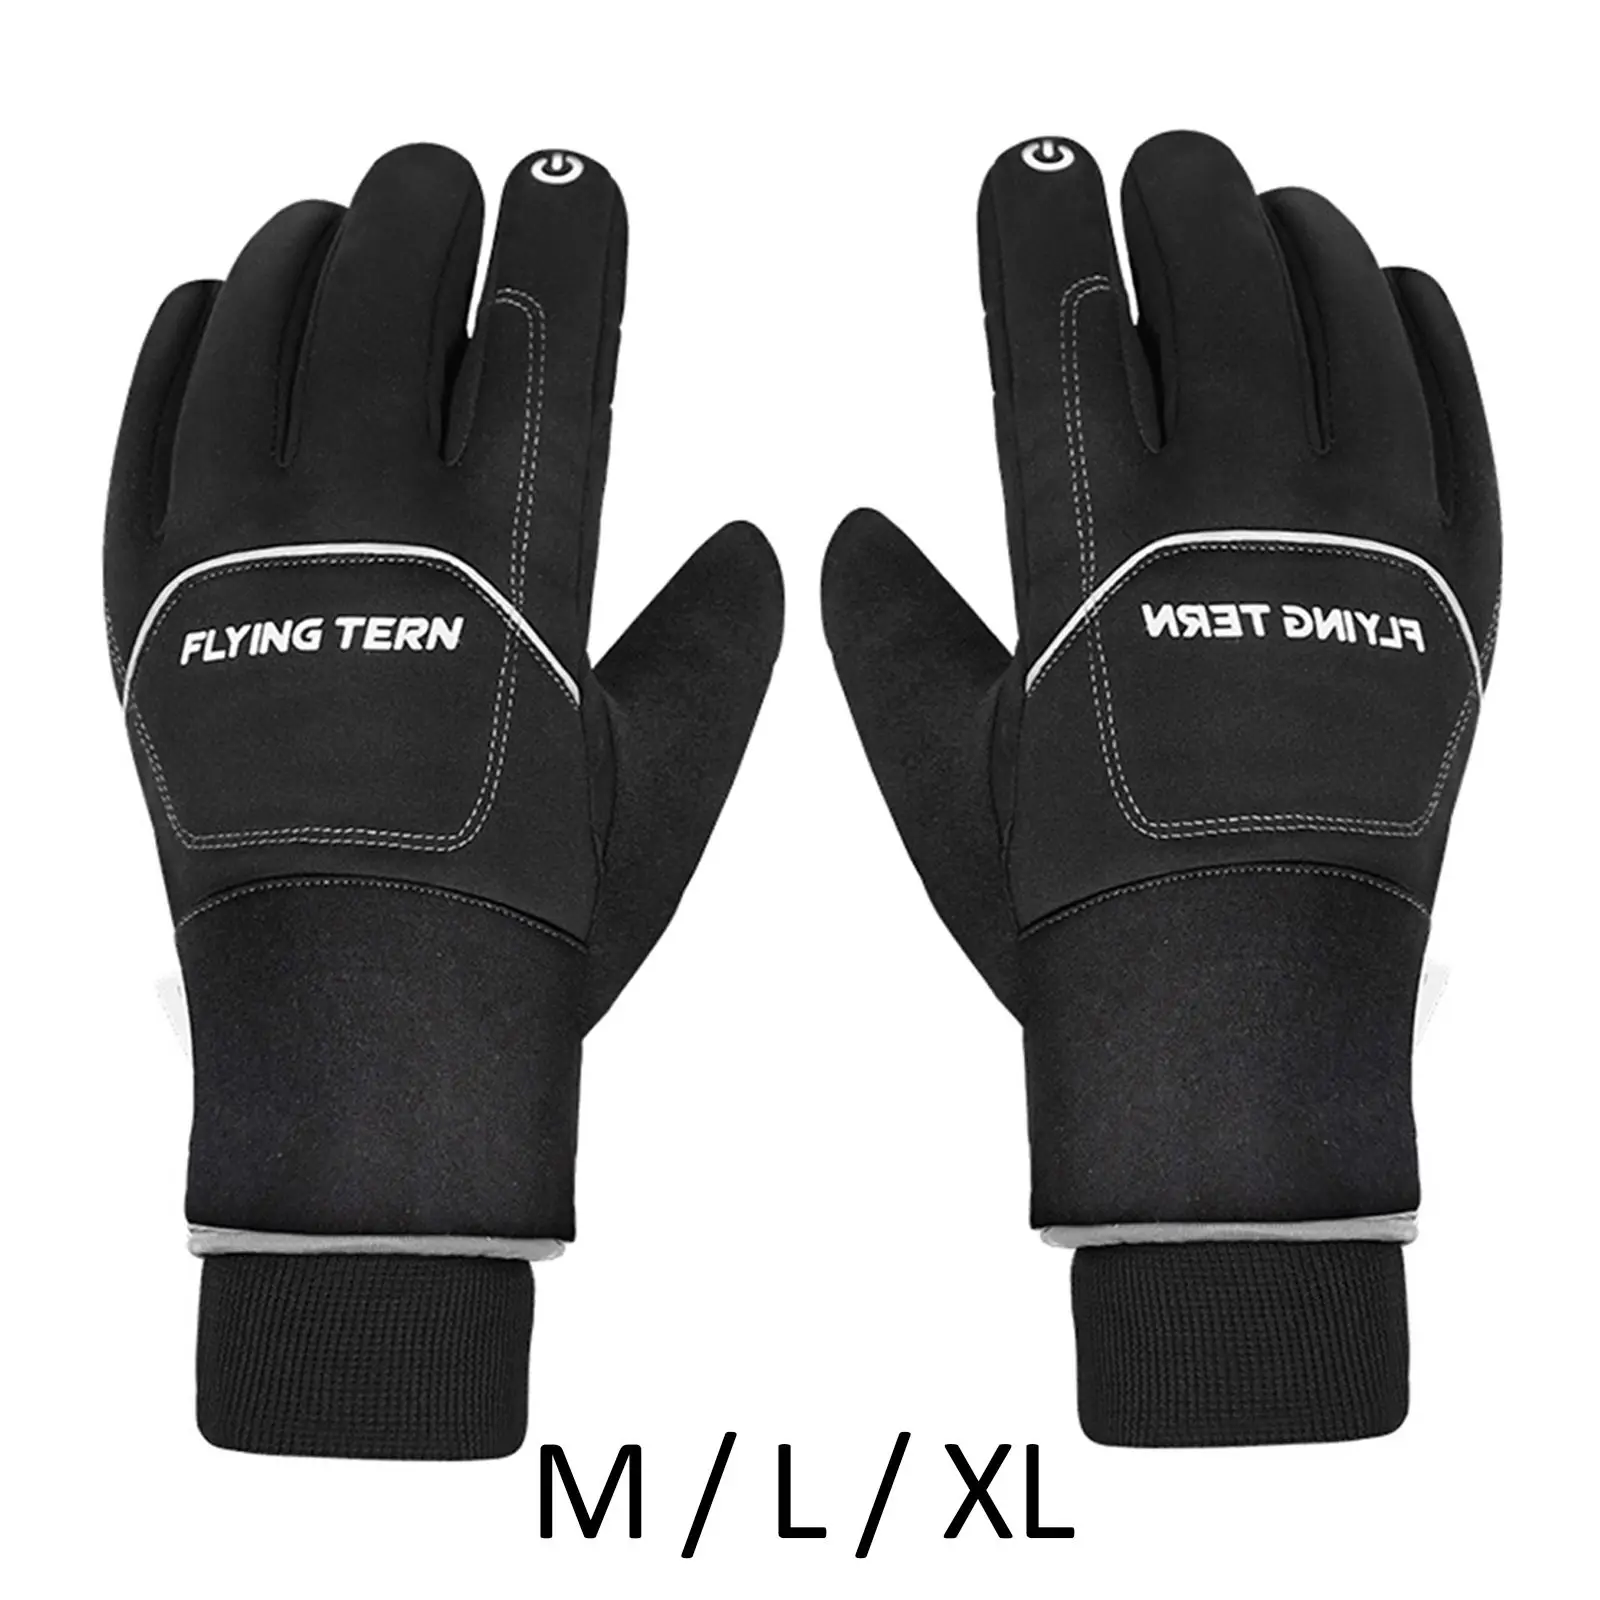 Winter Gloves Touchscreen Gloves Thermal Gloves for Running Hiking